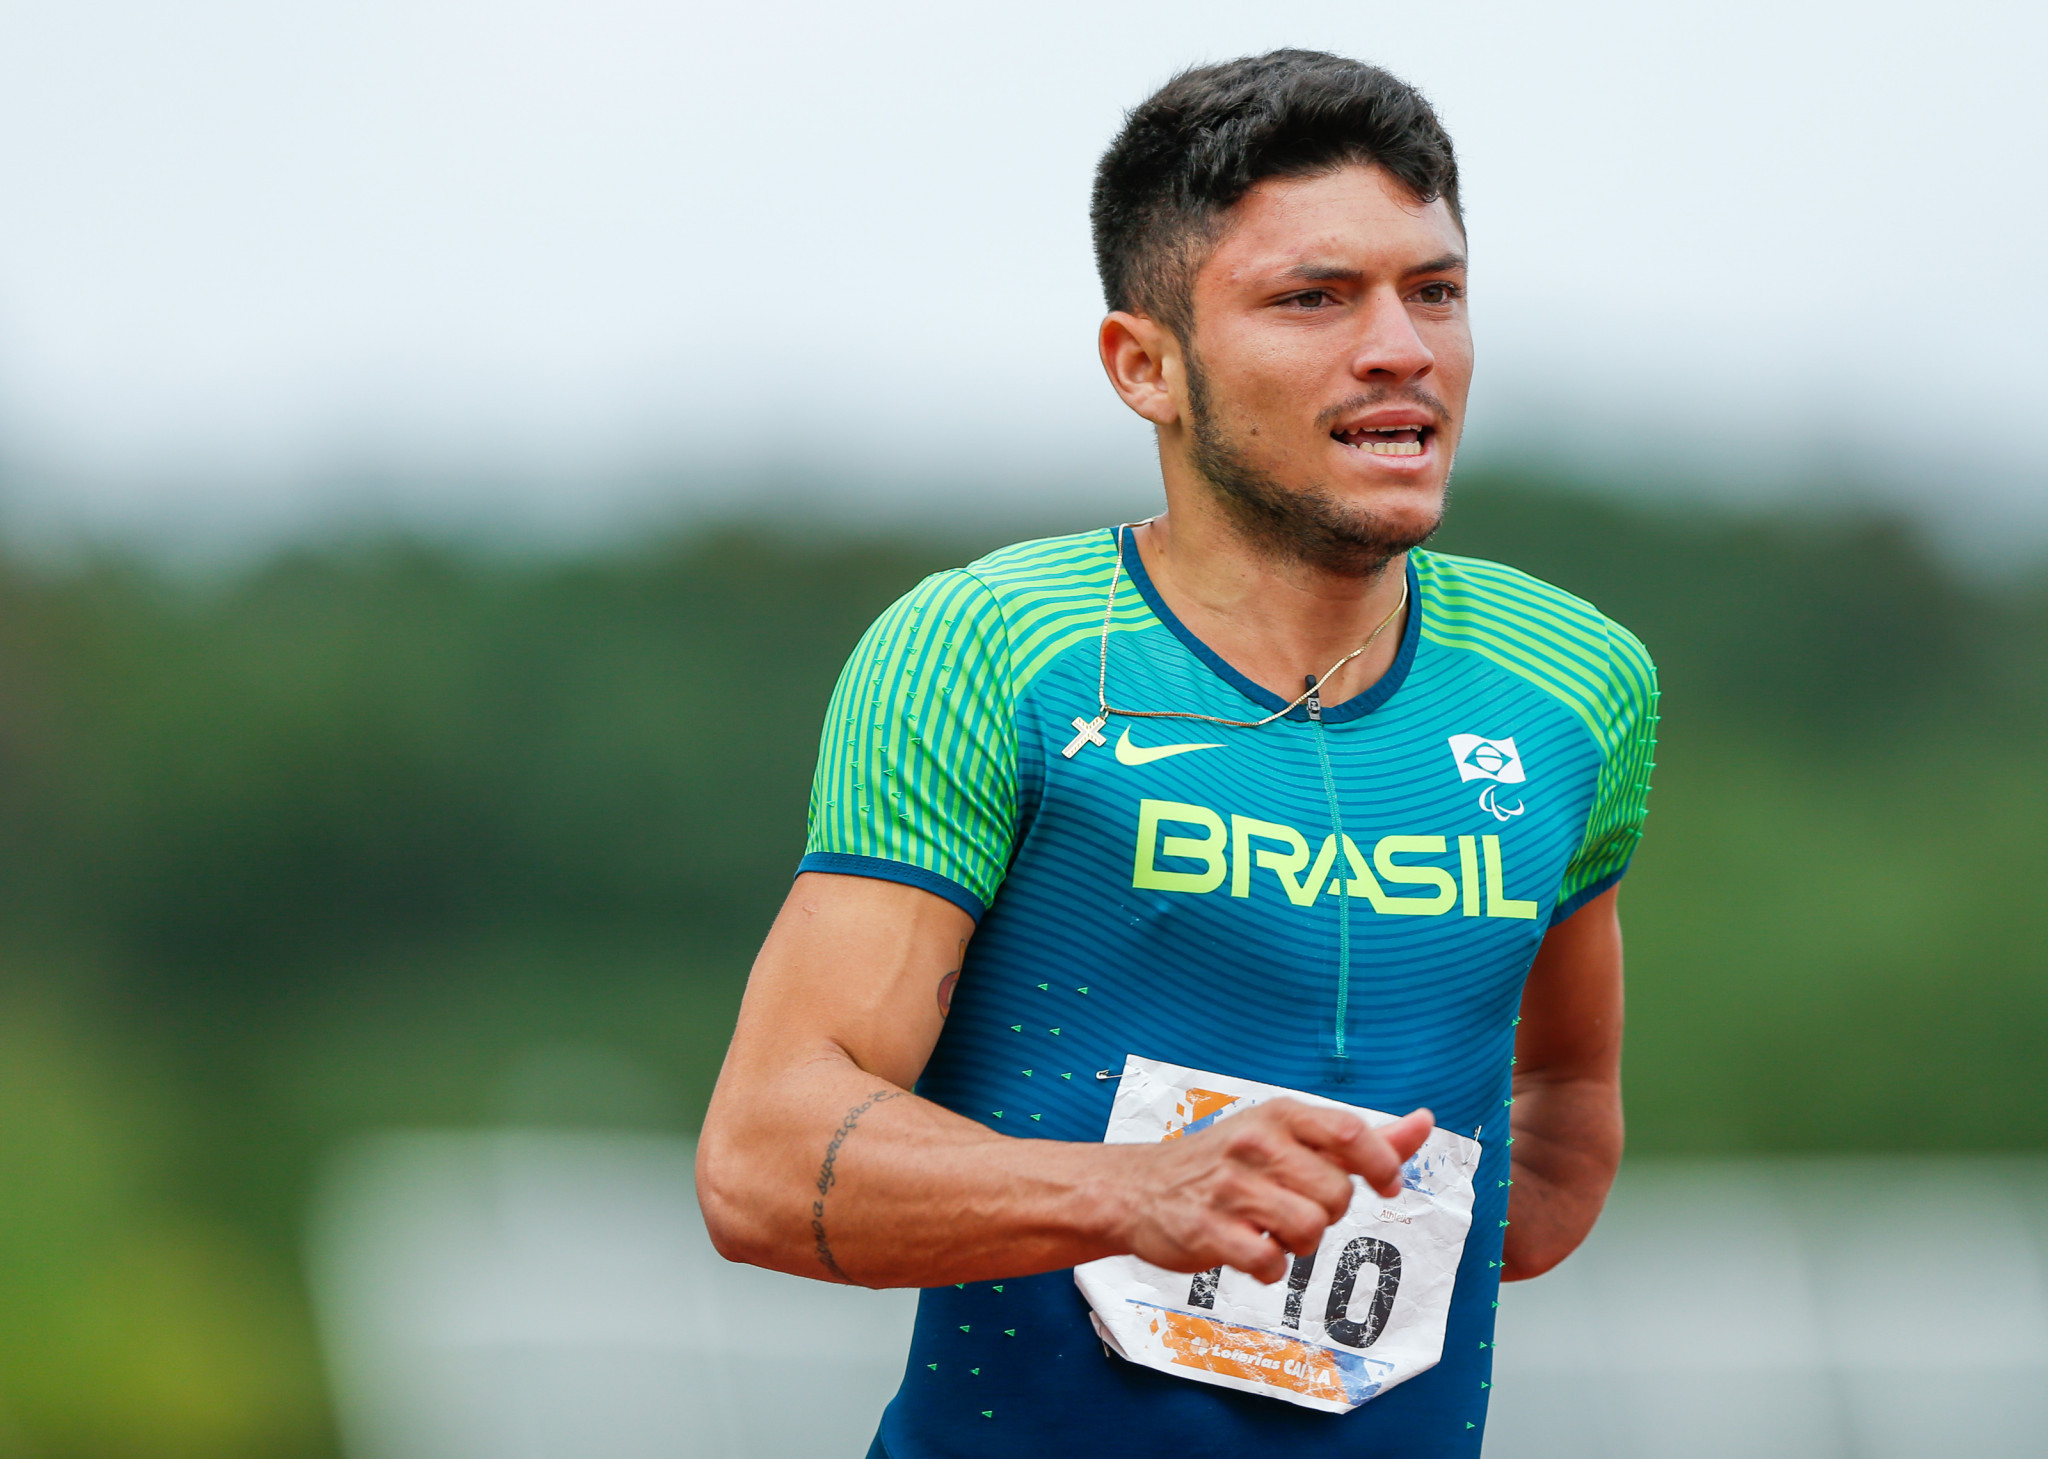 Brazilian sprinting success at World Para Athletics Grand Prix in Berlin